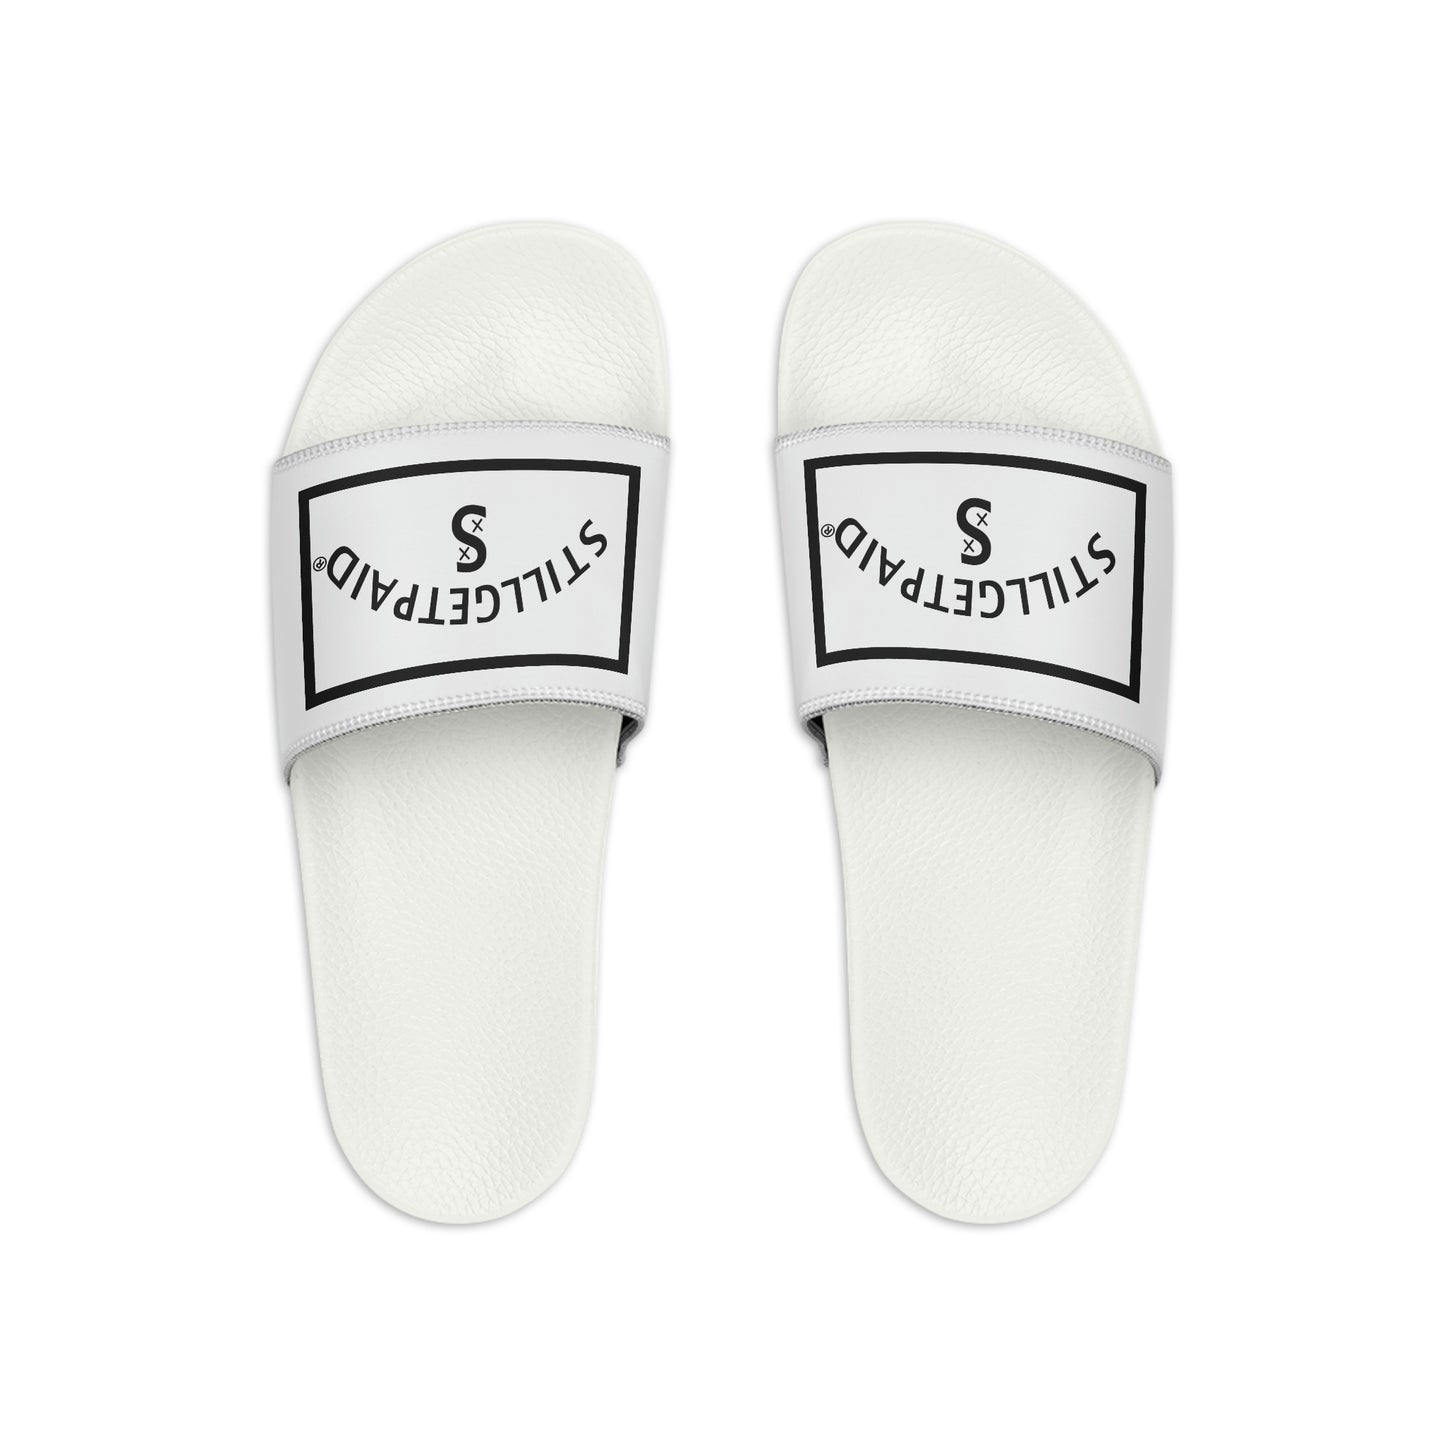 STILLGETPAID®️ APPAREL Youth Slide Sandals